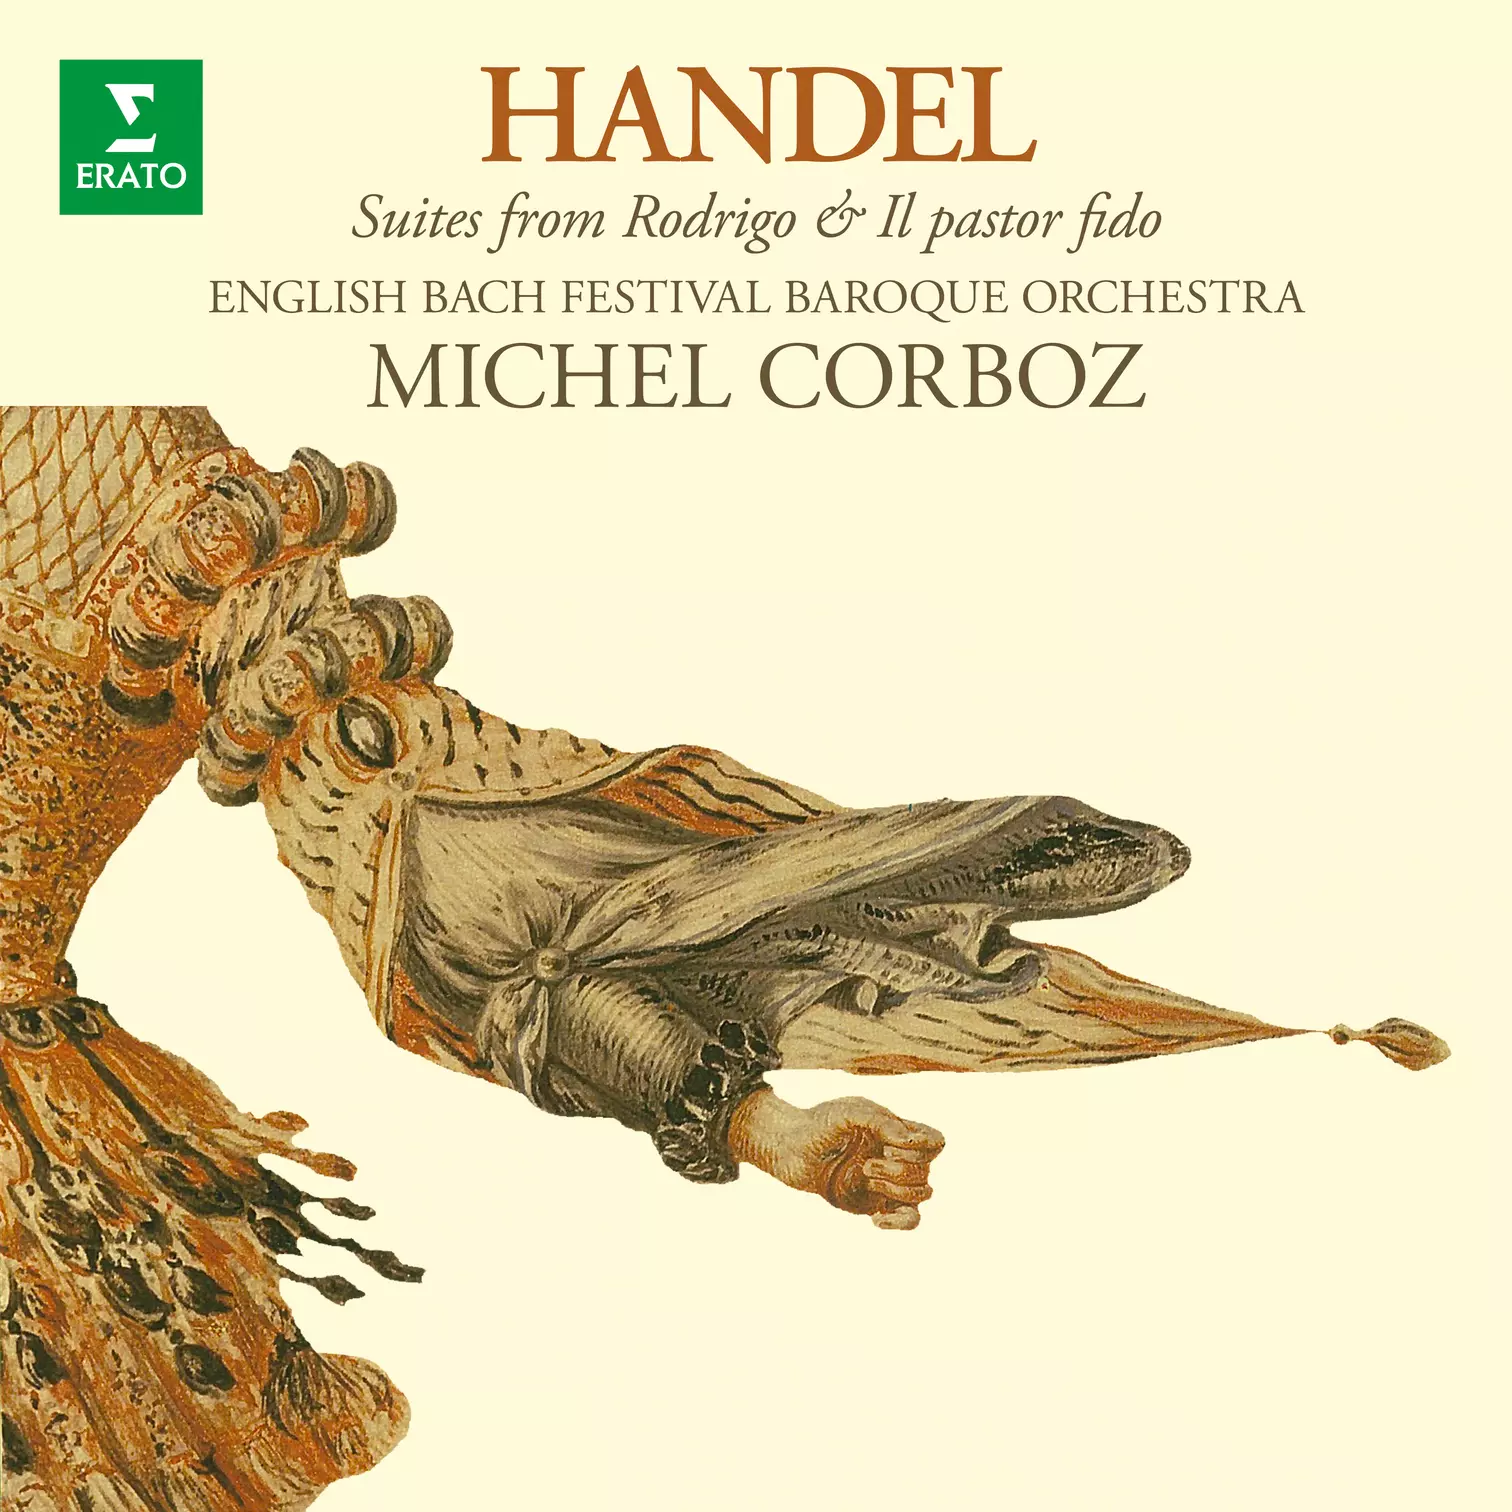 Handel: Suites from Rodrigo & Il pastor fido